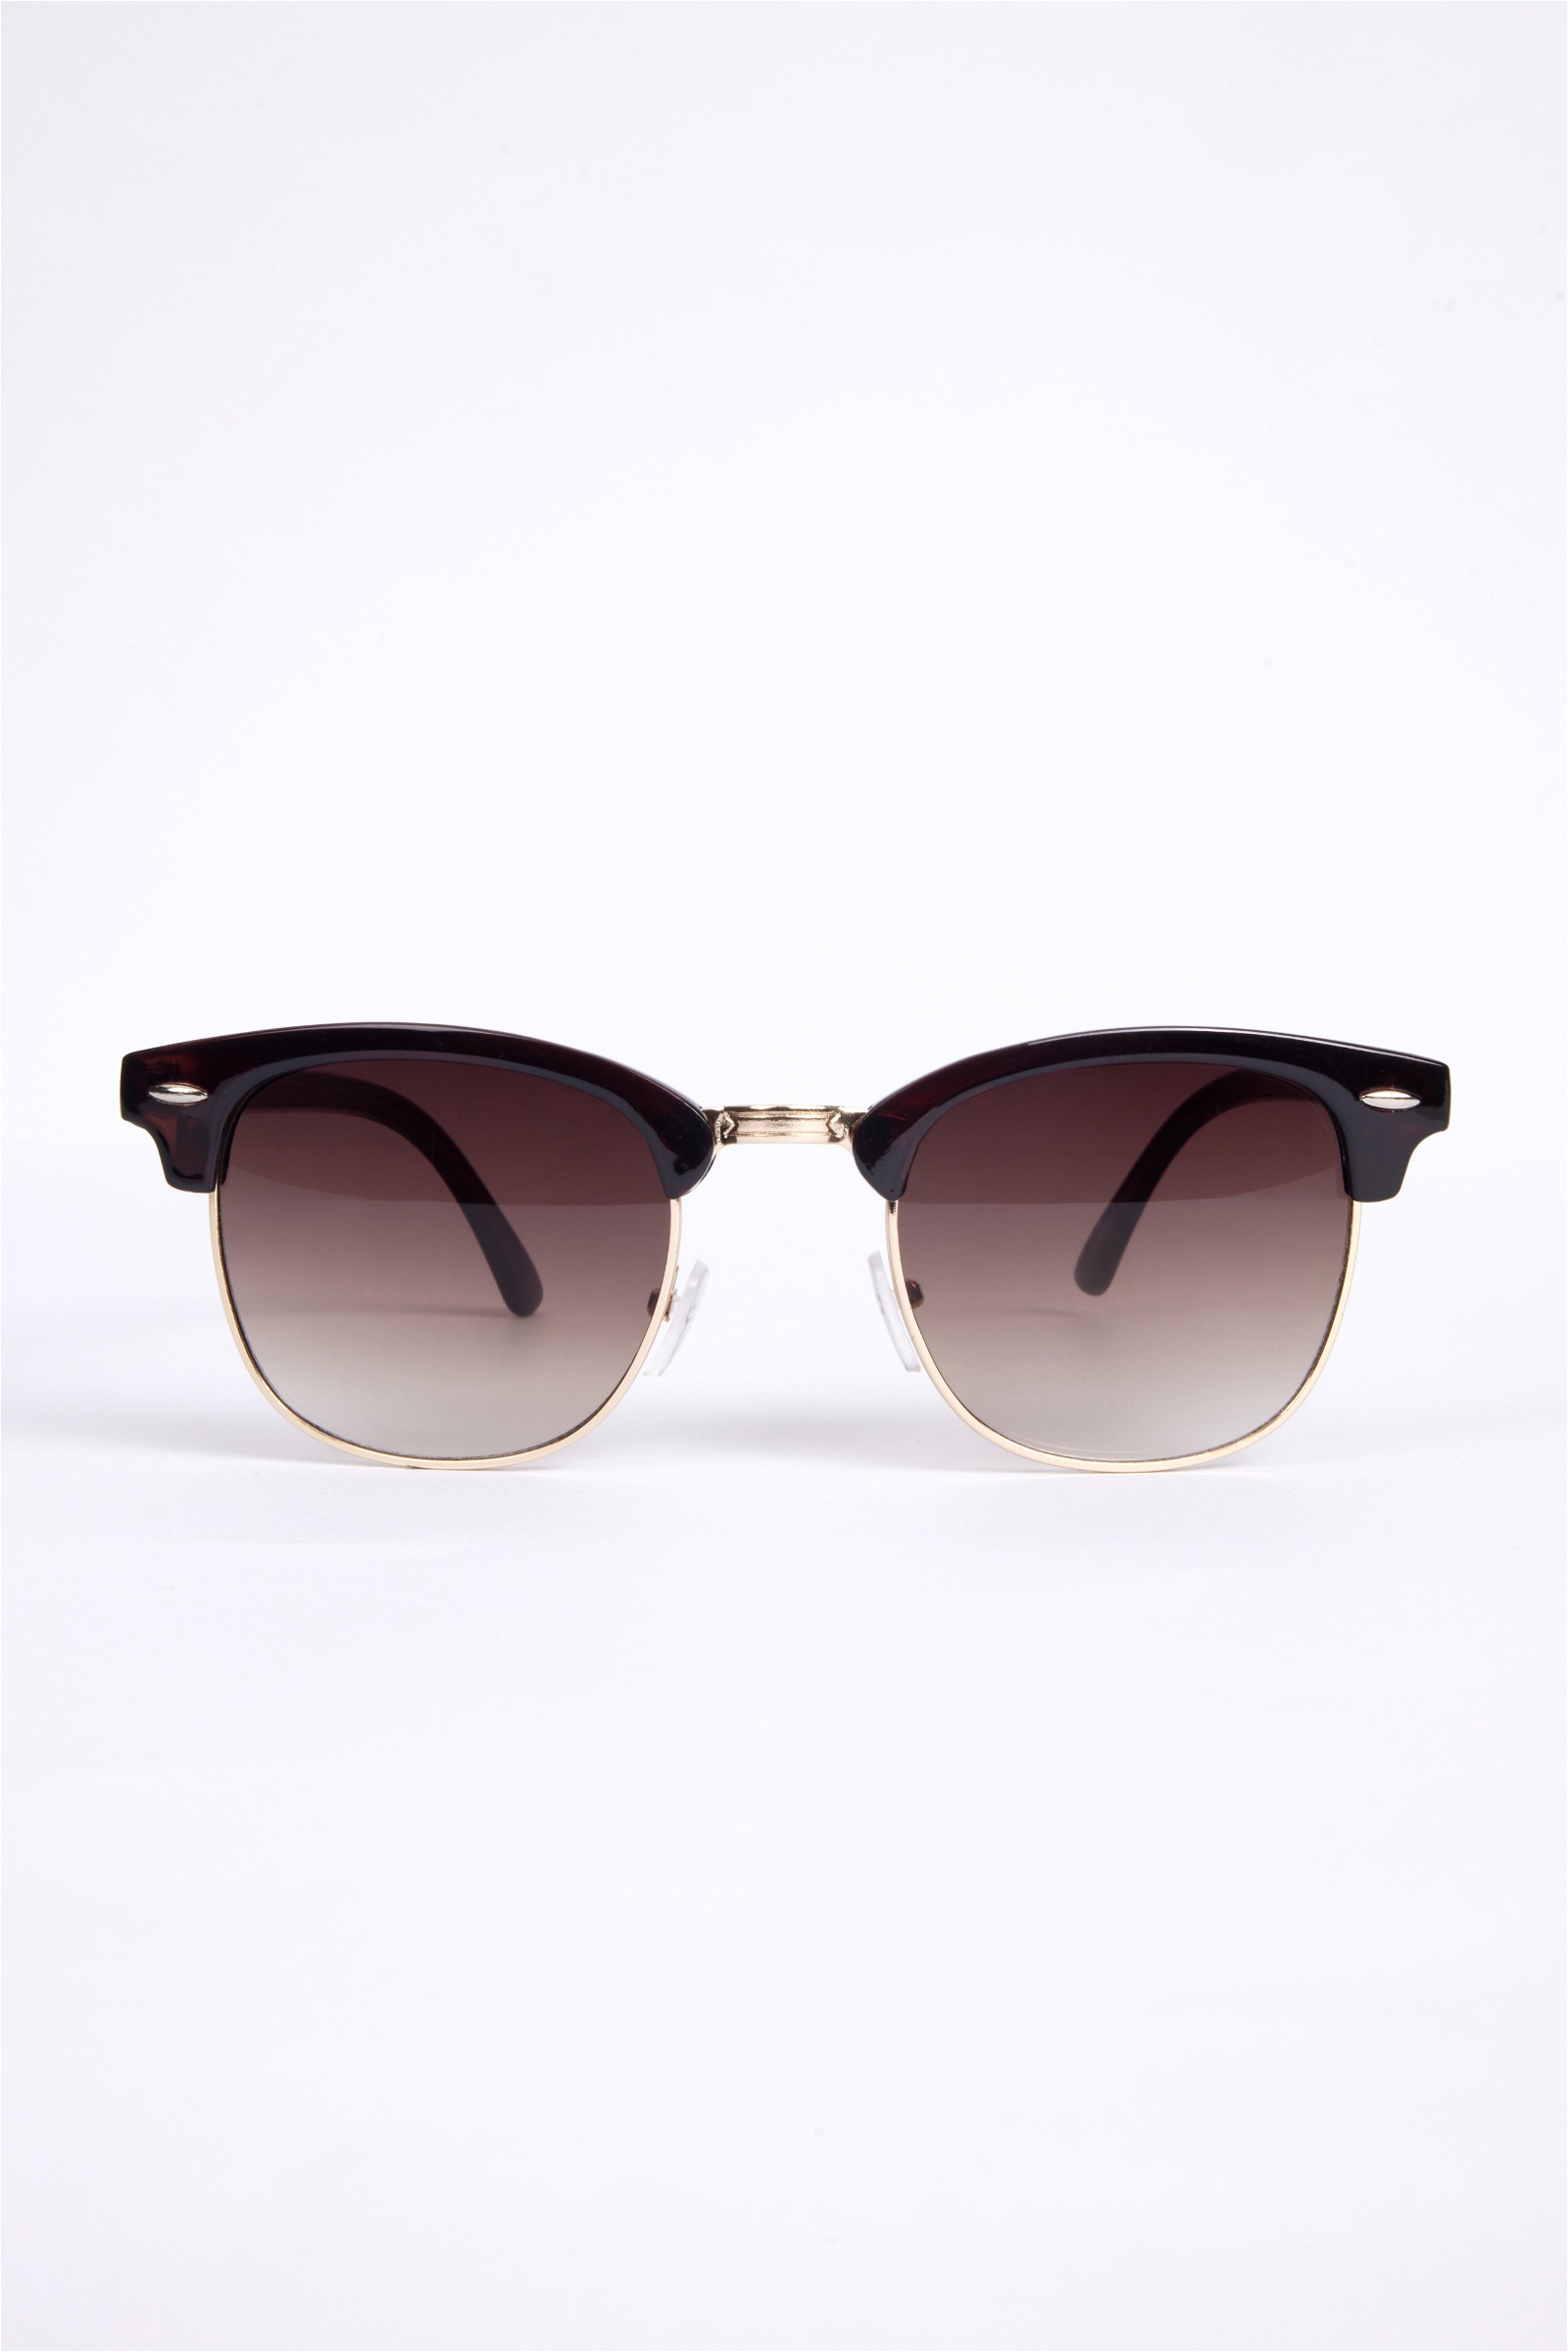 Plain Brown Sunglasses